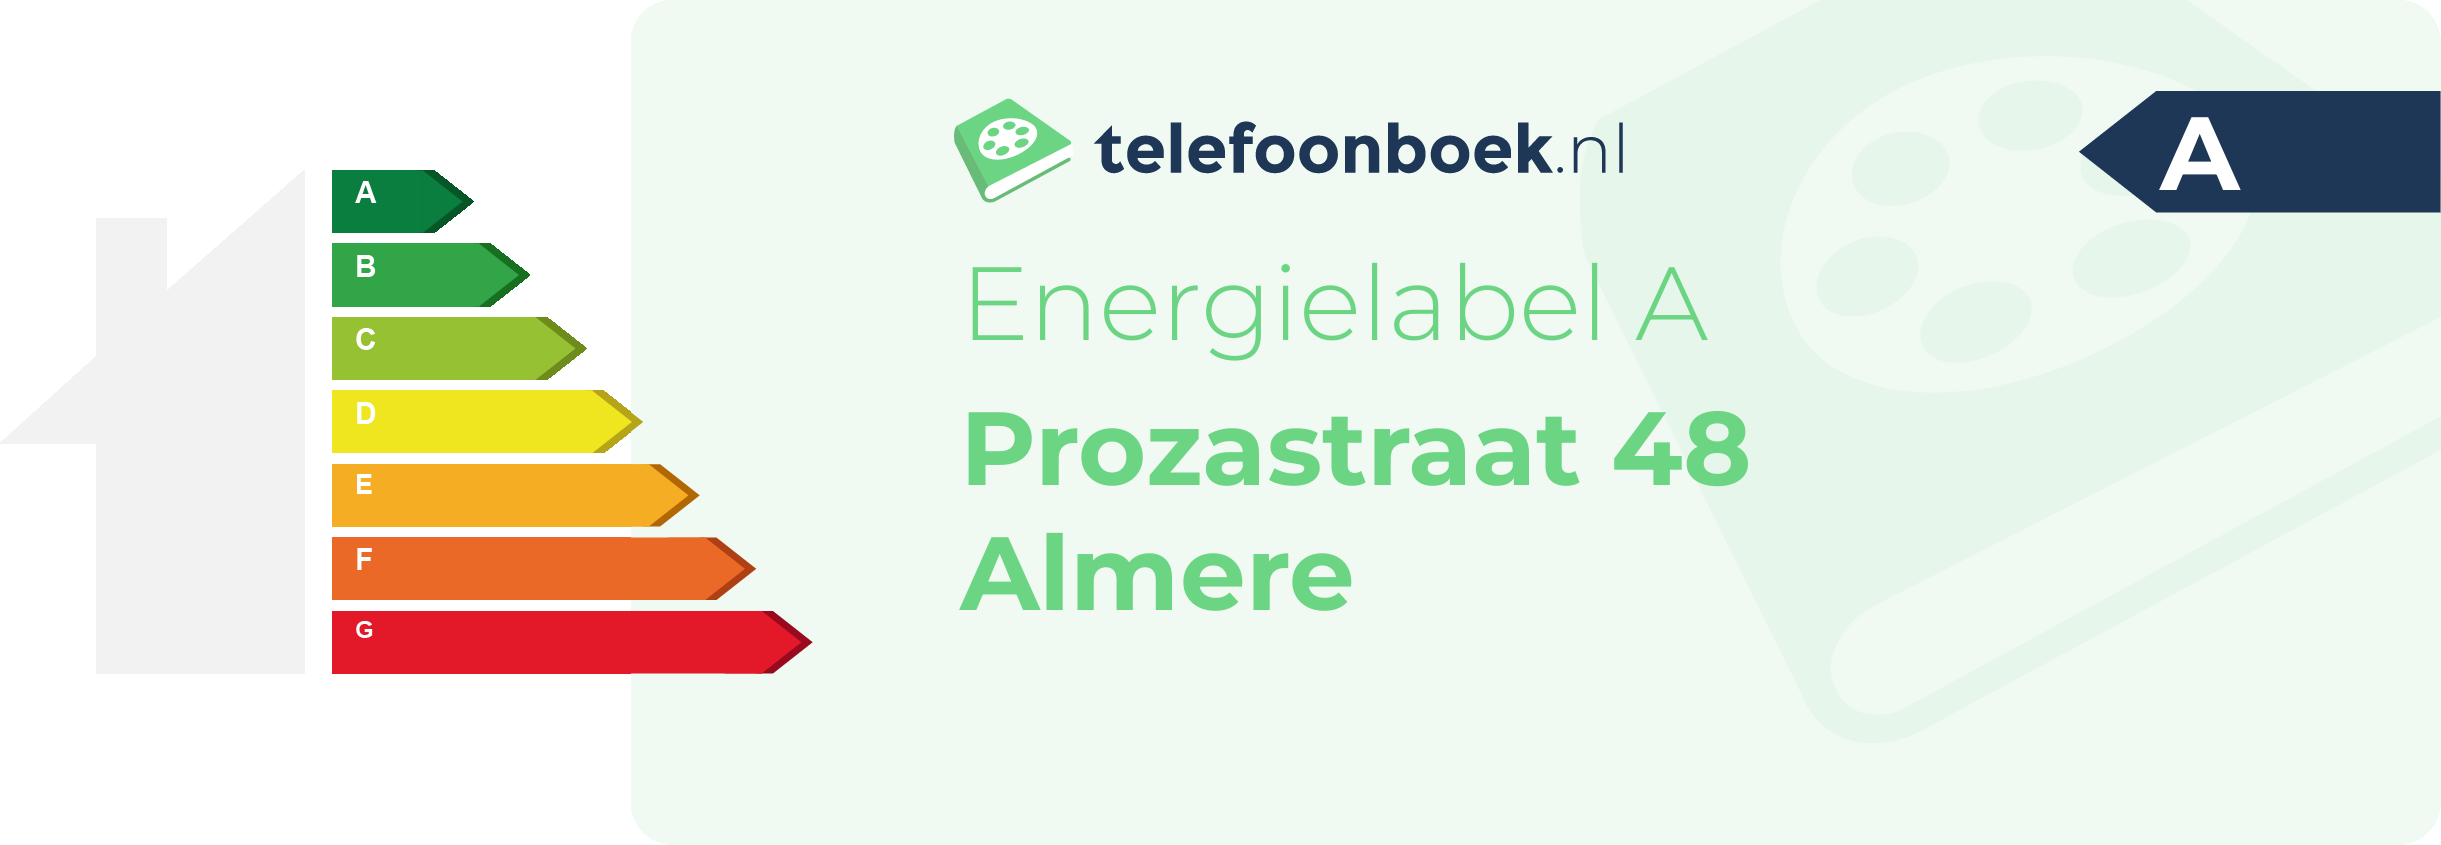 Energielabel Prozastraat 48 Almere